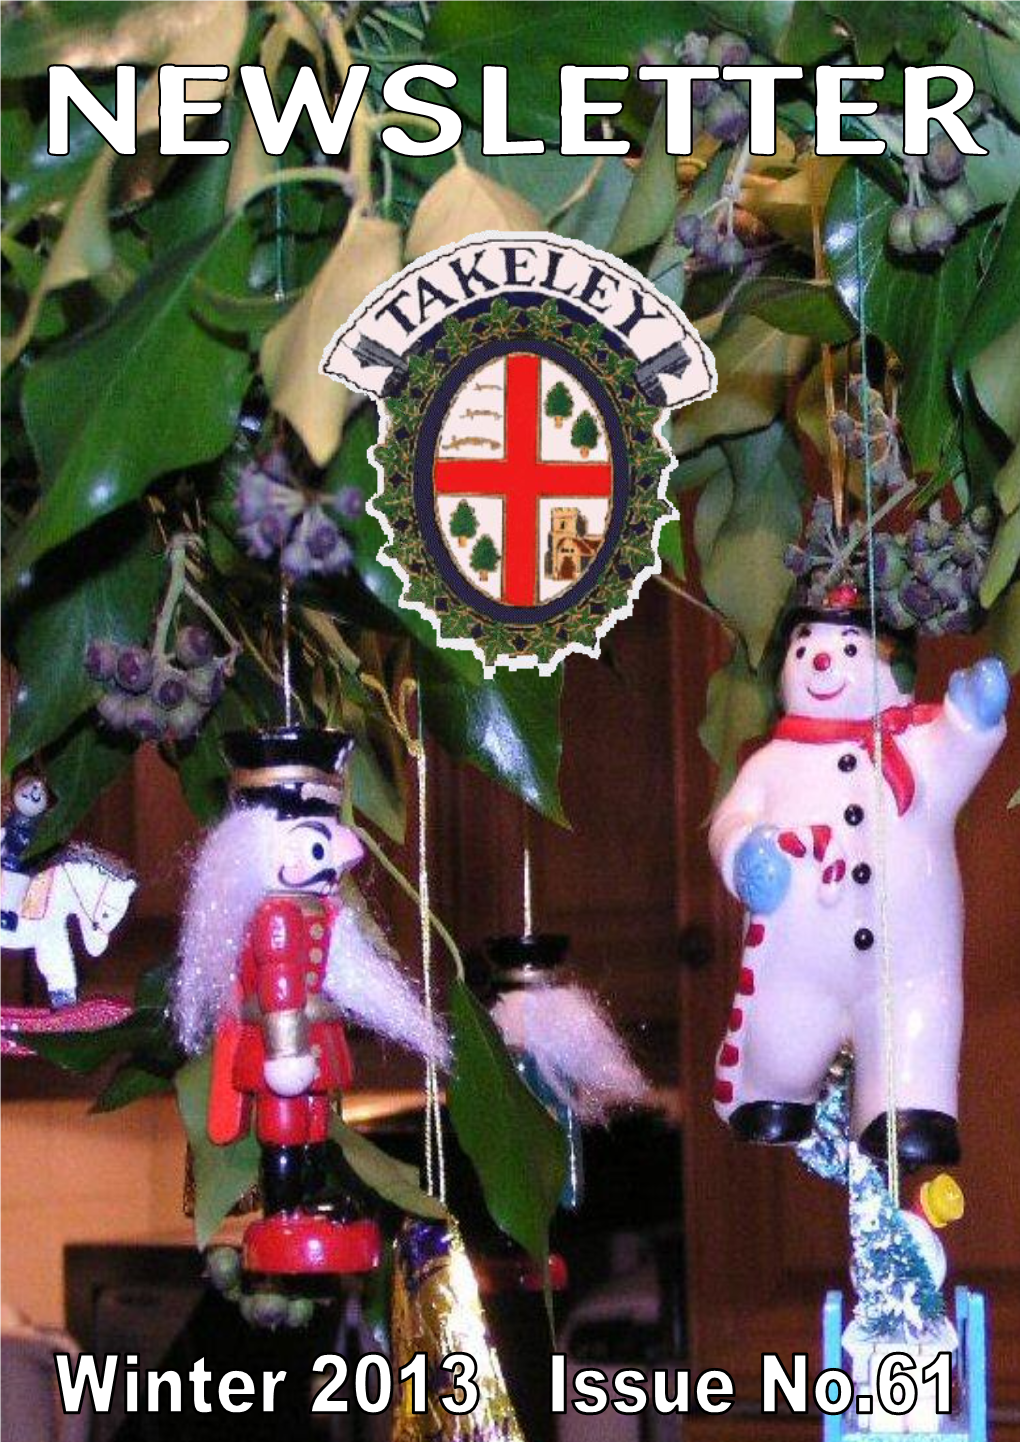 Takeley Parish Council 2013/14 Tpc Responsibilities